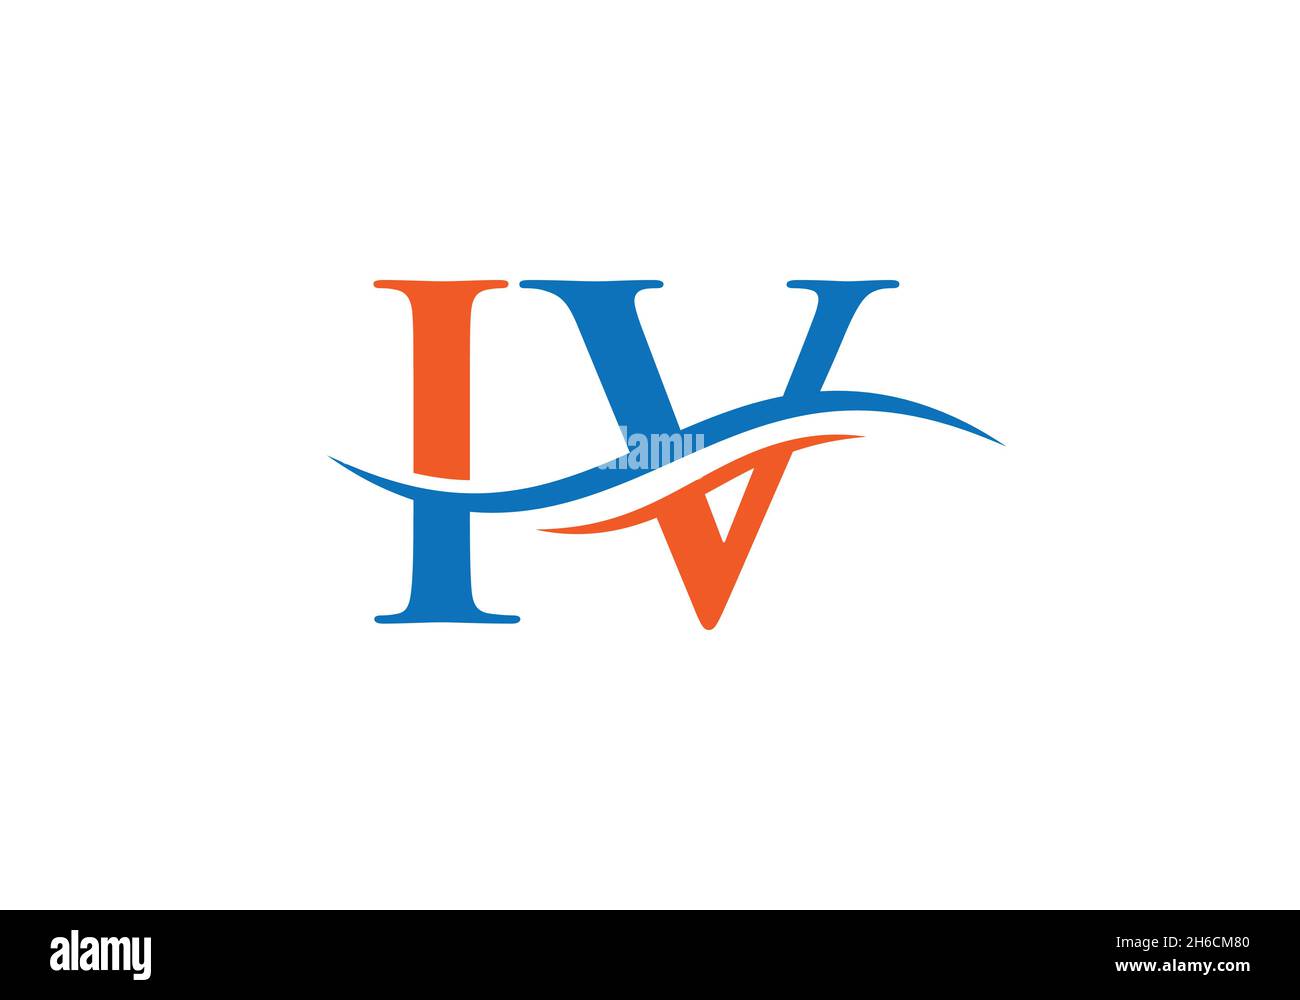 3,670 Iv Logo Images, Stock Photos, 3D objects, & Vectors